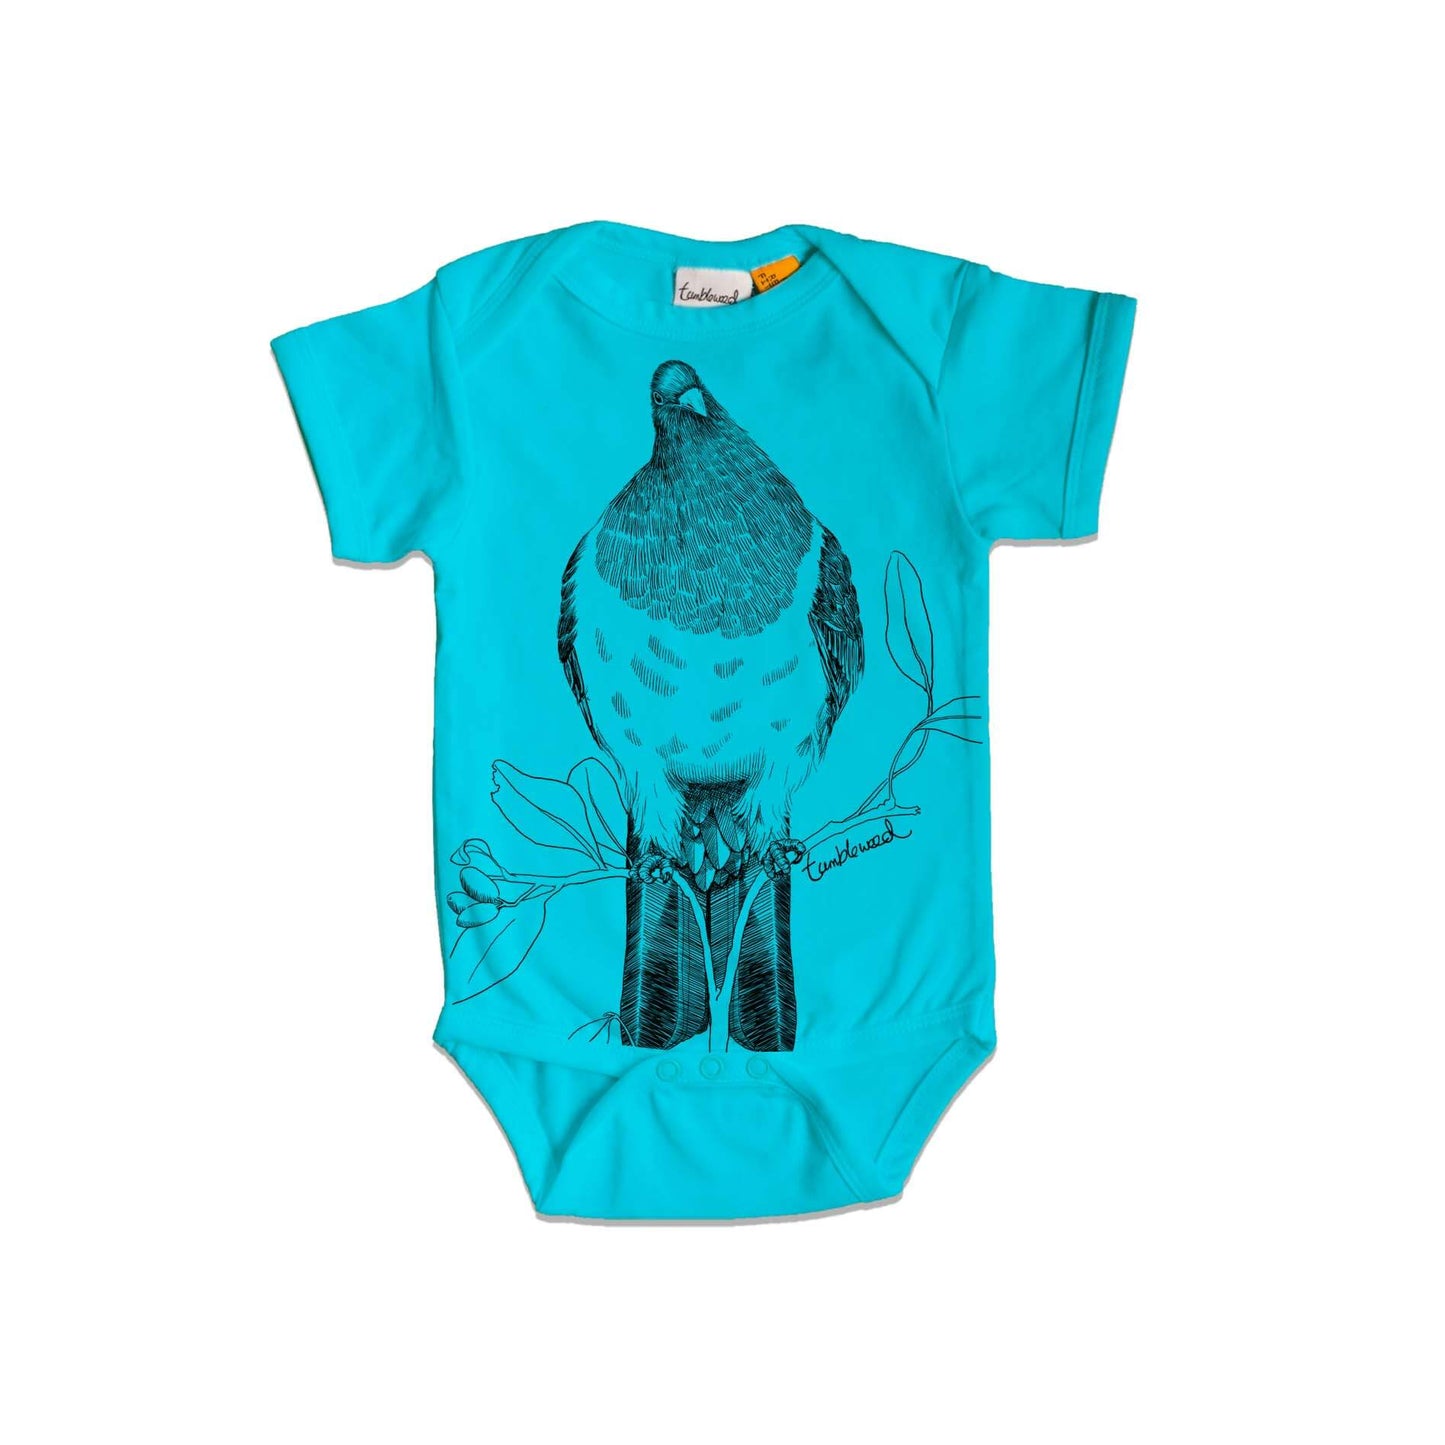 Short sleeved, blue, organic cotton, baby onesie featuring a screen printed Kereru design.